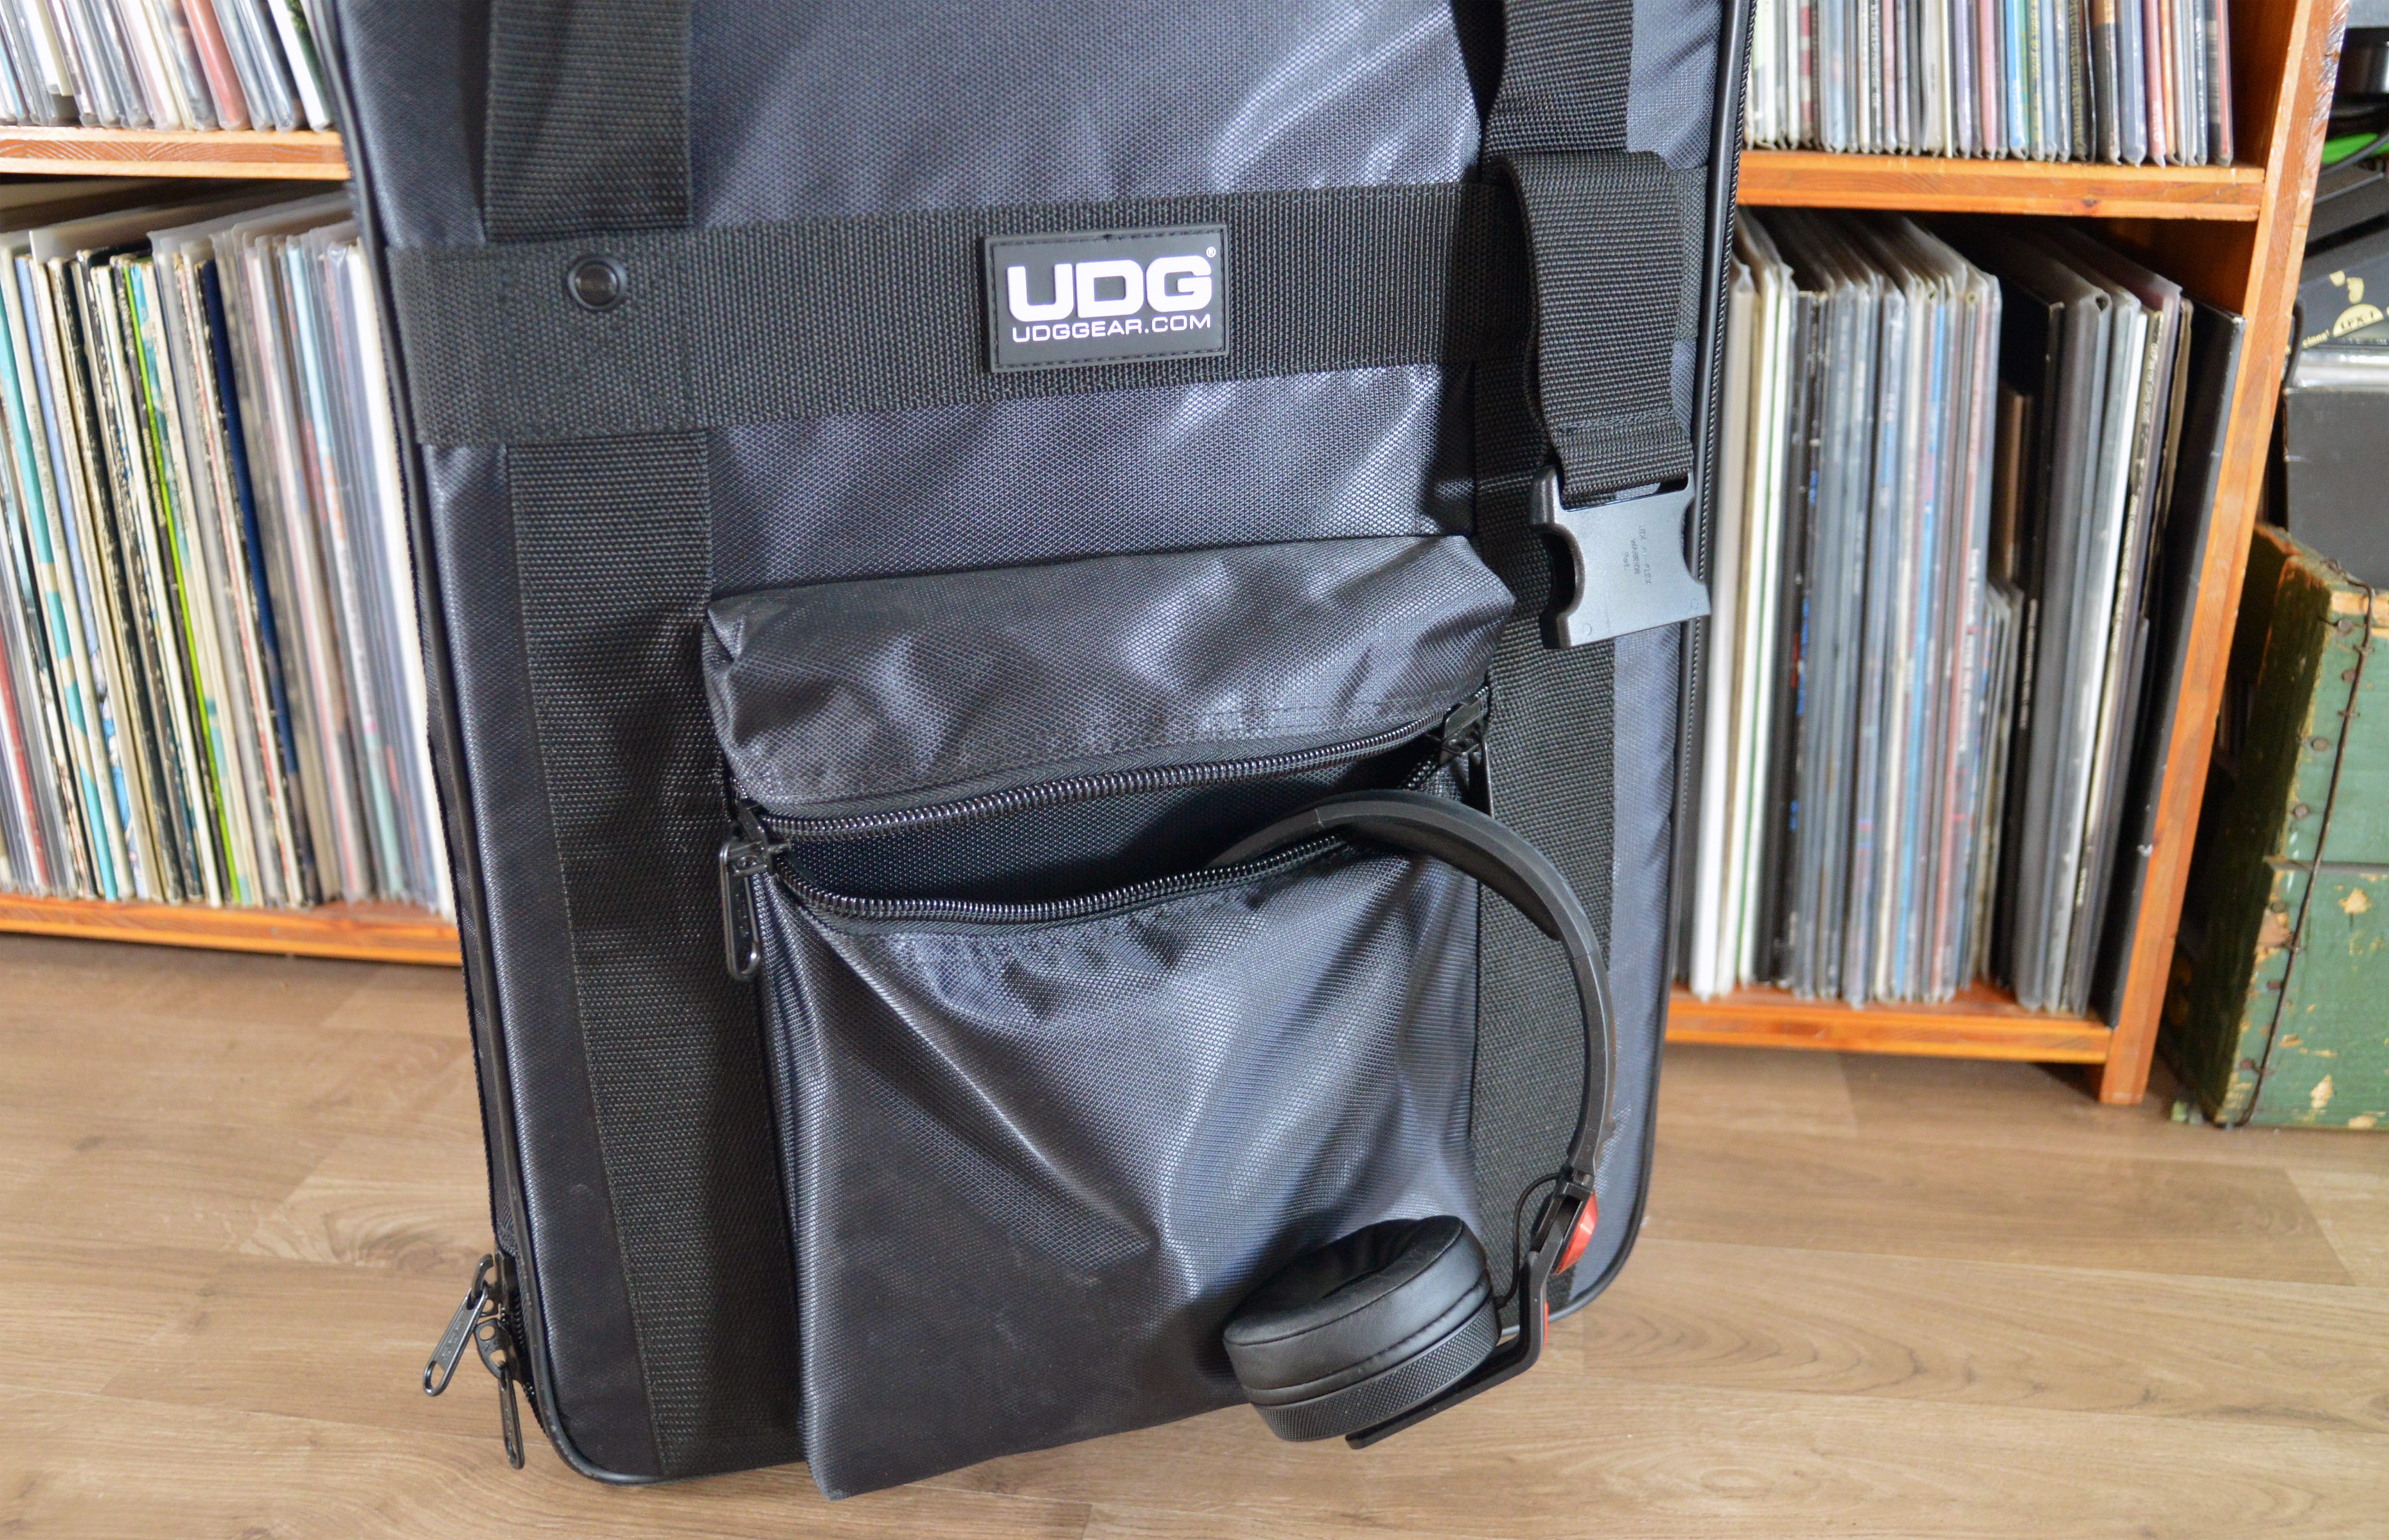 Test: UDG CD Player Mixer Bag Large MK2, DJ-Bag - AMAZONA.de